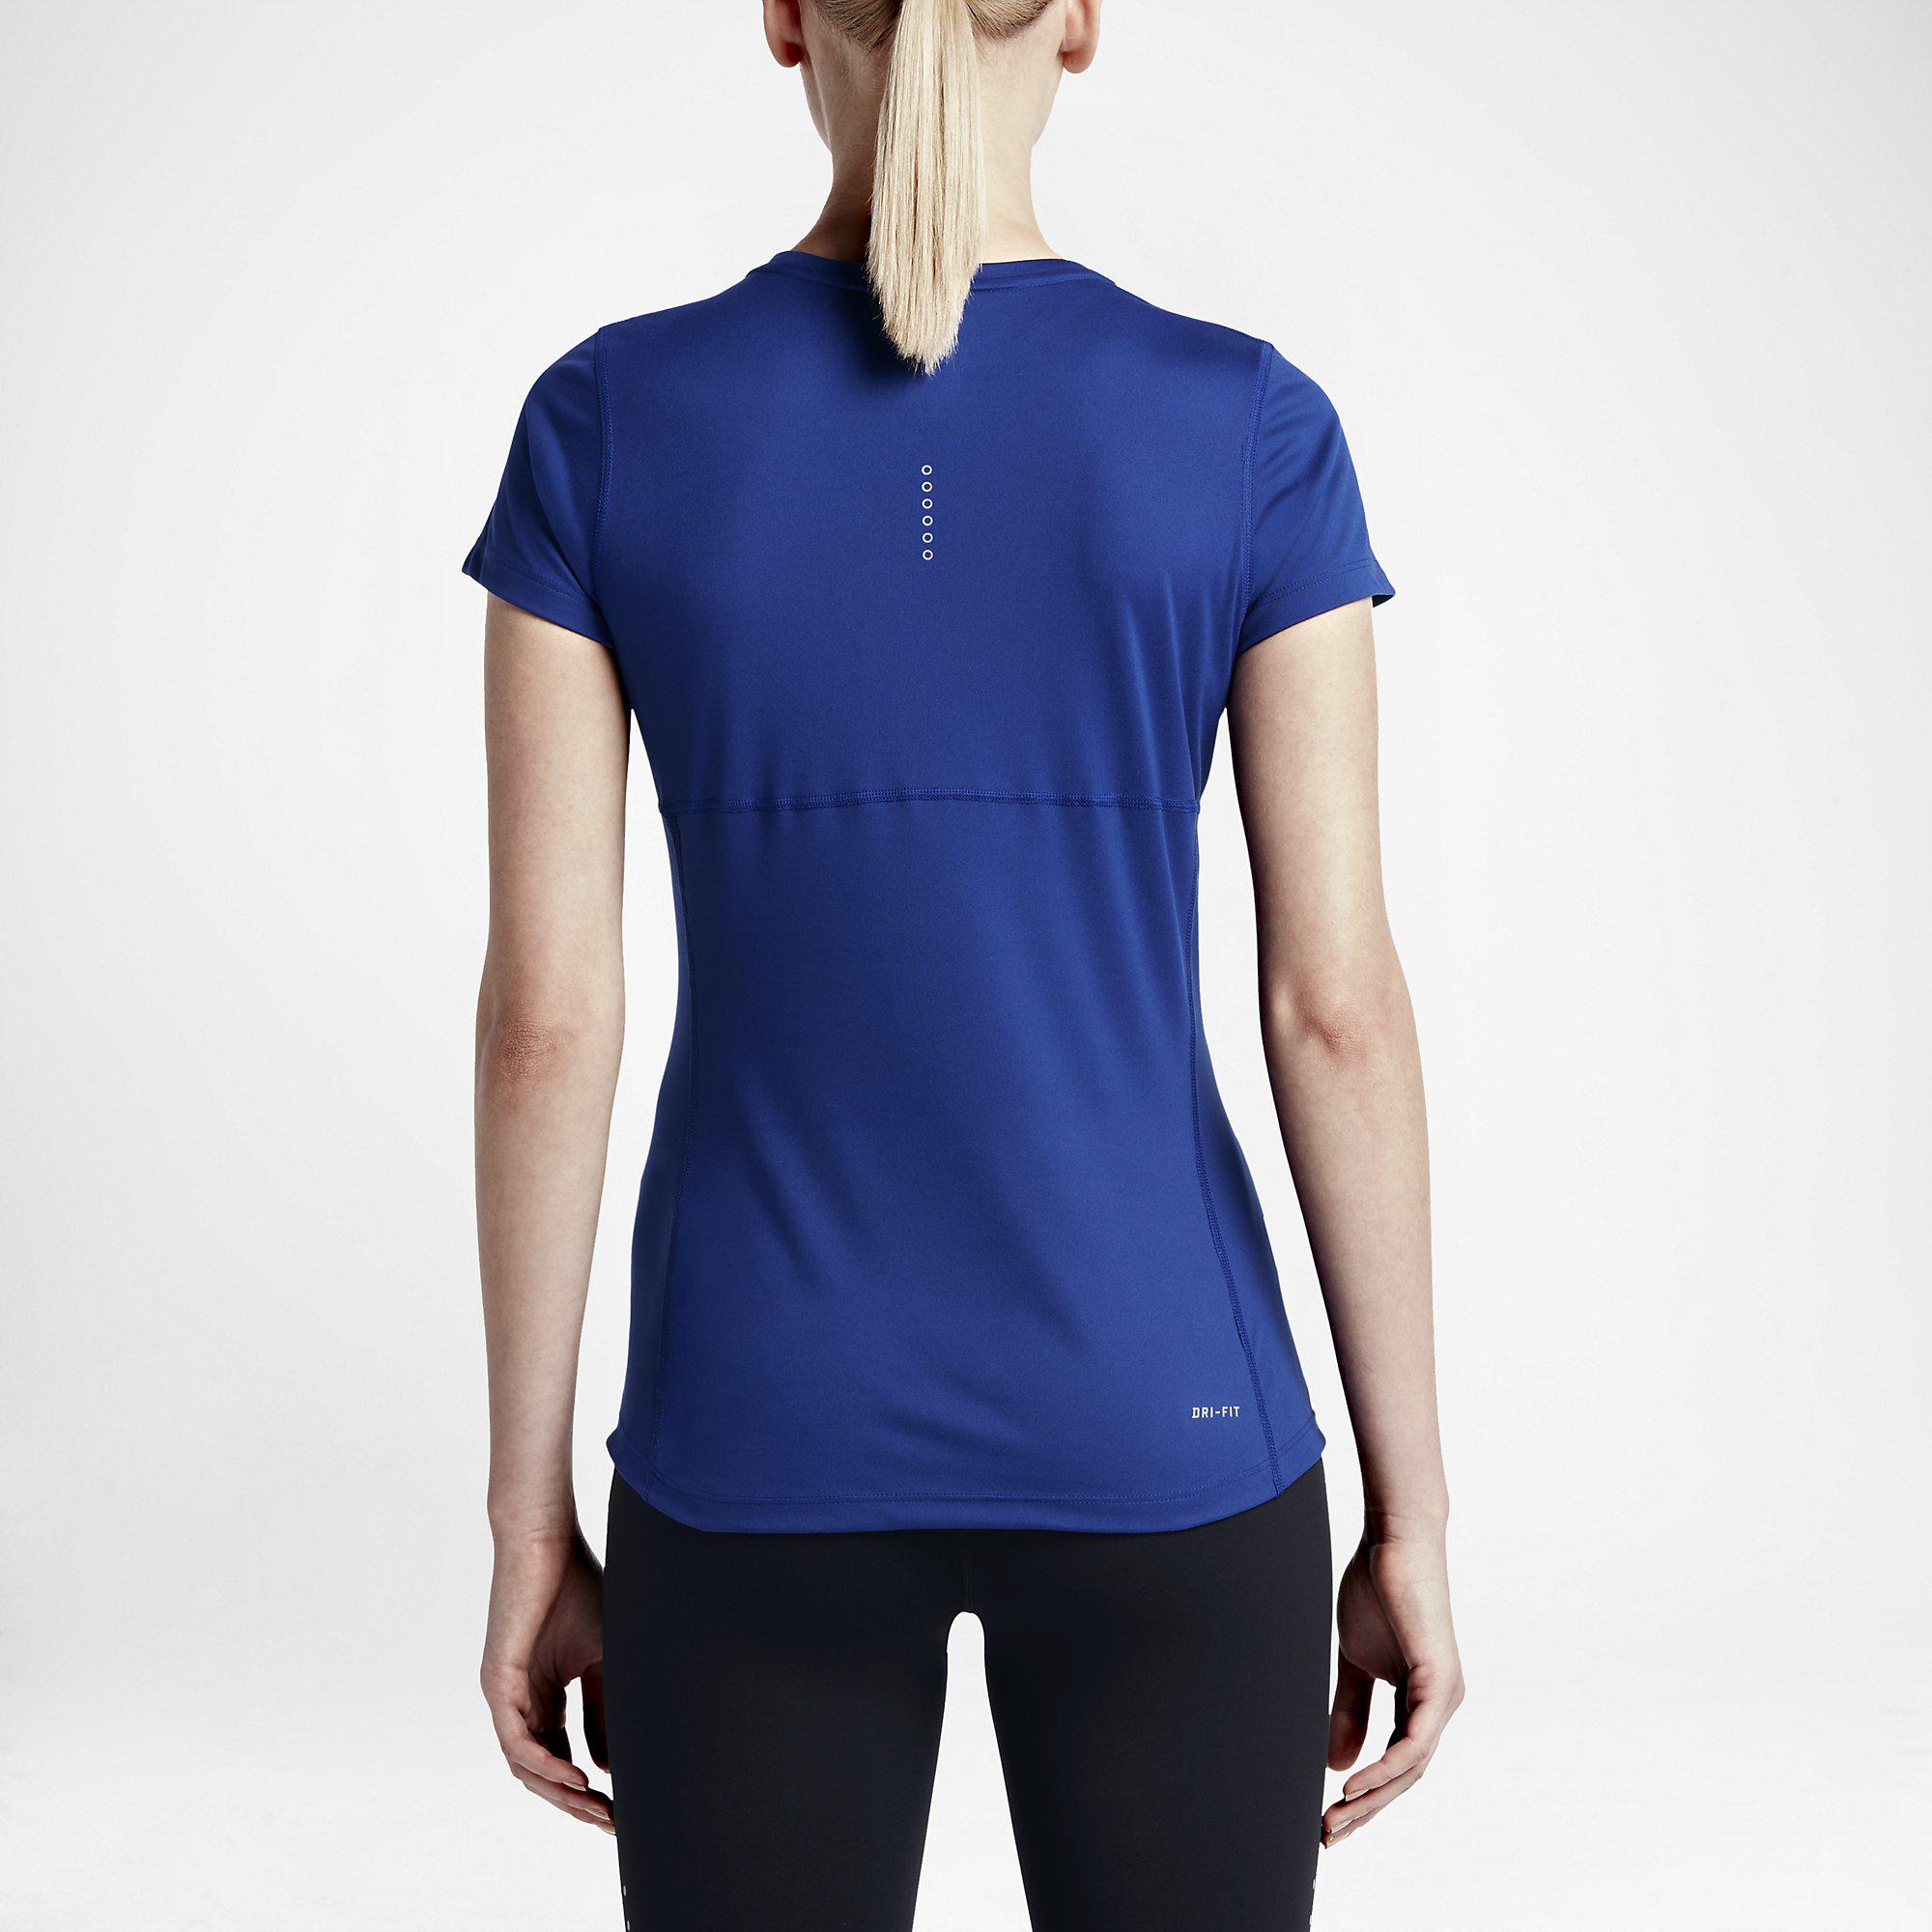 Nike Womens Miler Short Sleeve Top - Deep Royal Blue - Tennisnuts.com